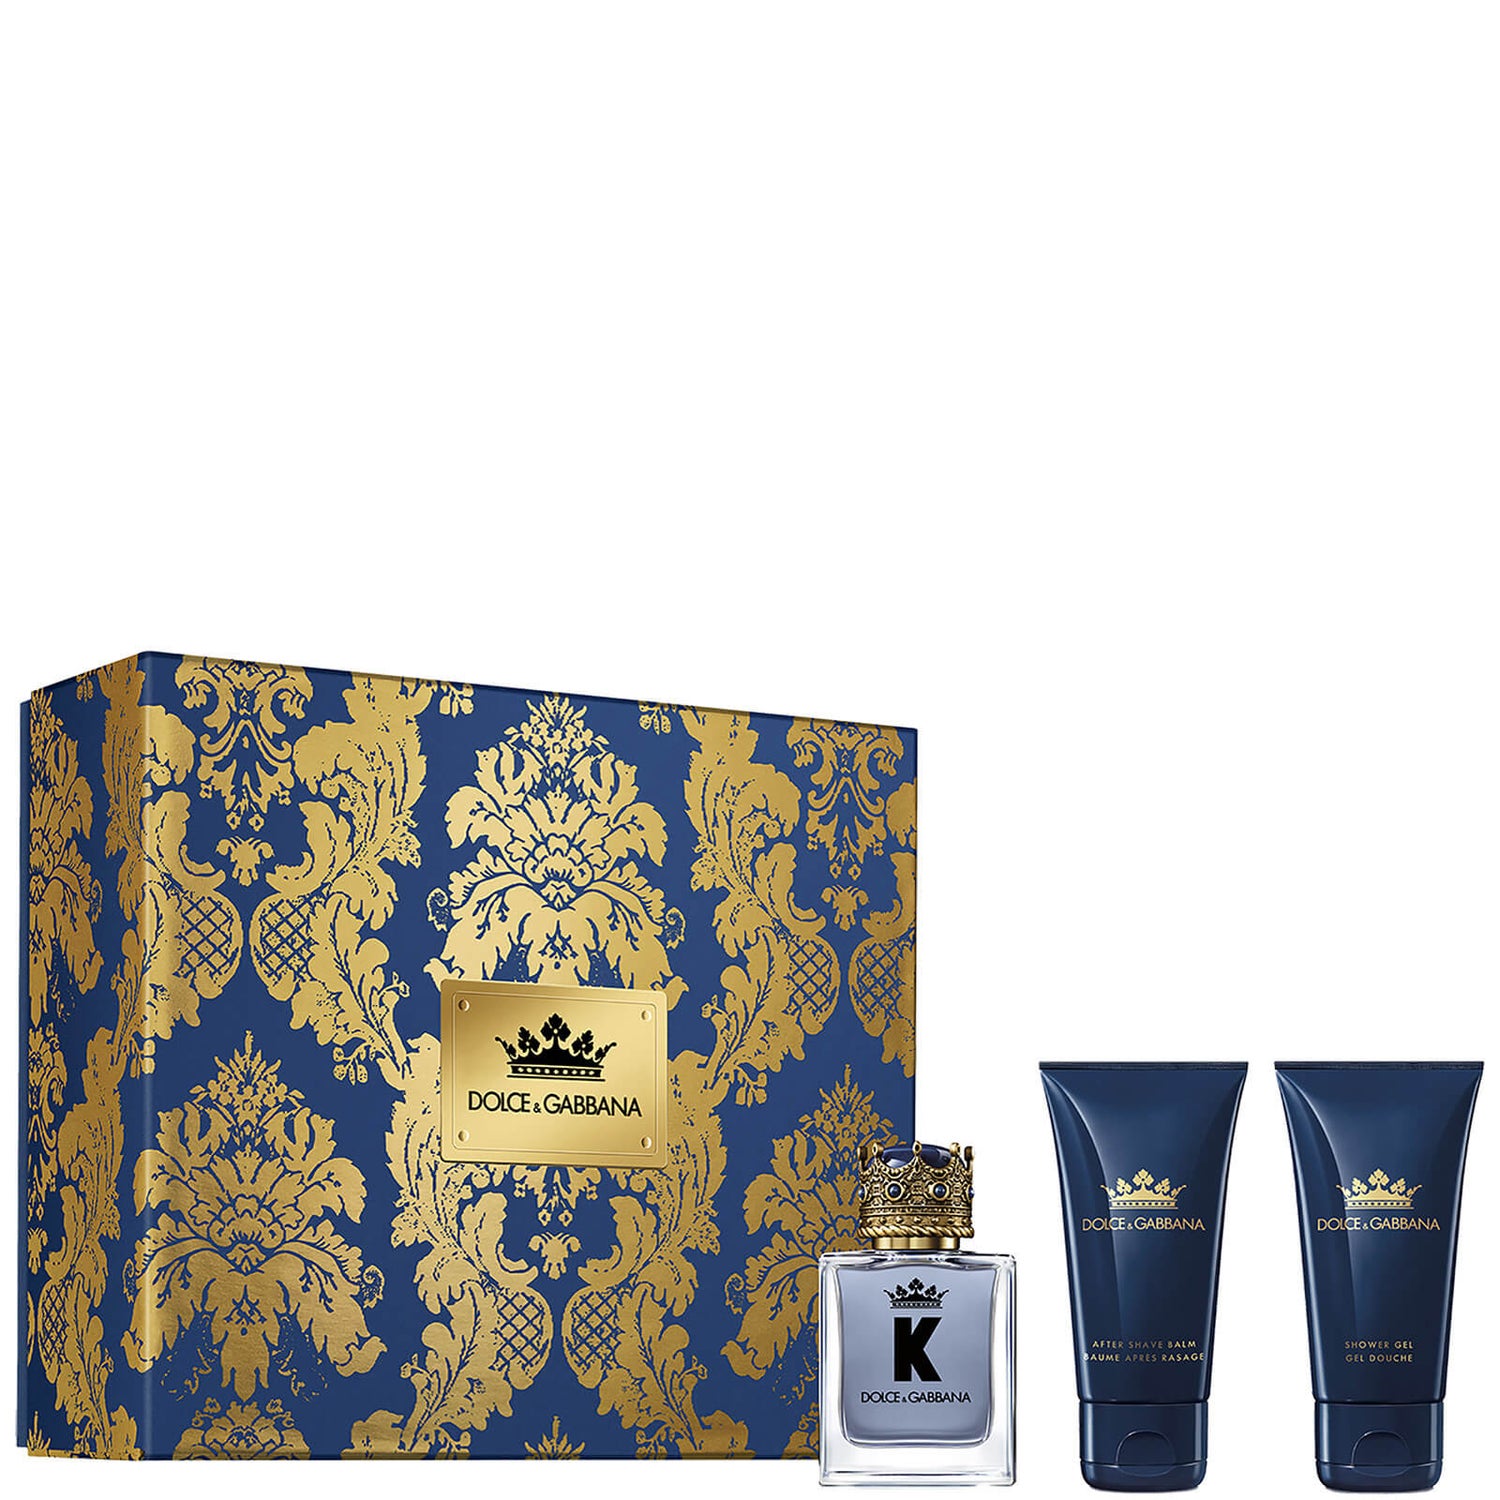 Dolce&Gabbana K Eau de Toilette Set - 50ml (Worth £64.00)